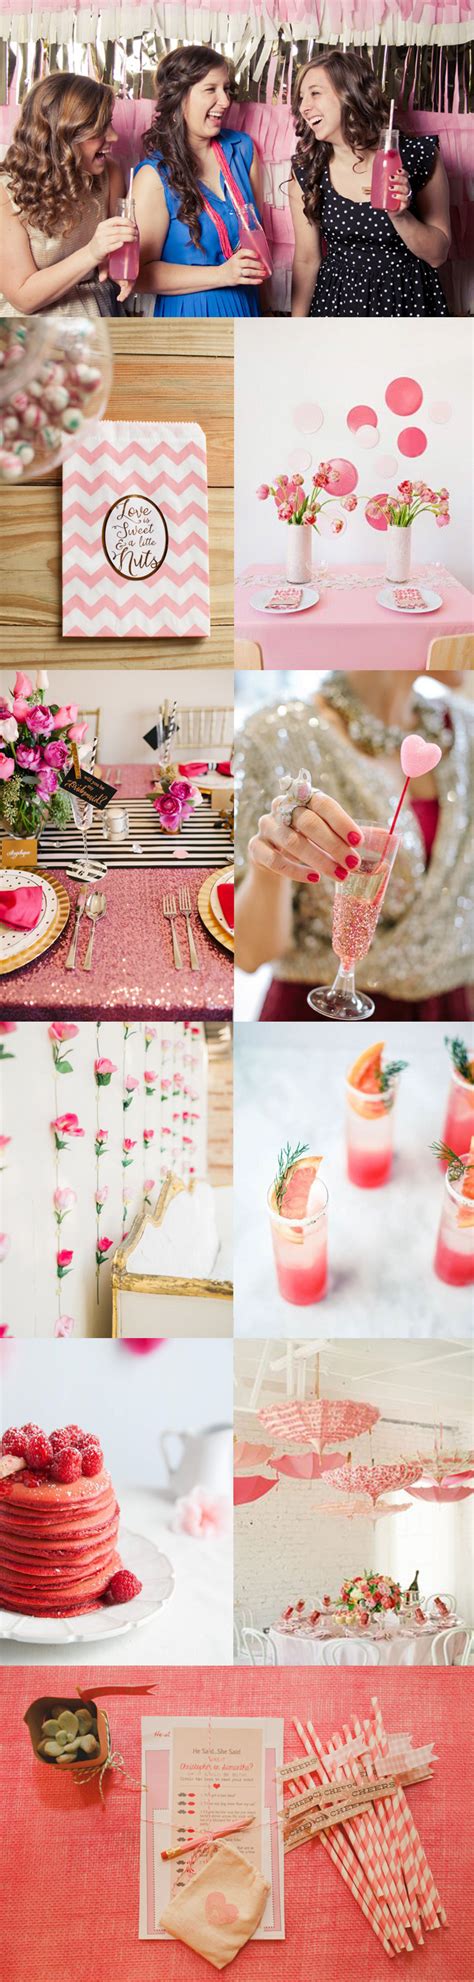 Pink Bridal Shower Inspiration Board Ultimate Bridesmaid